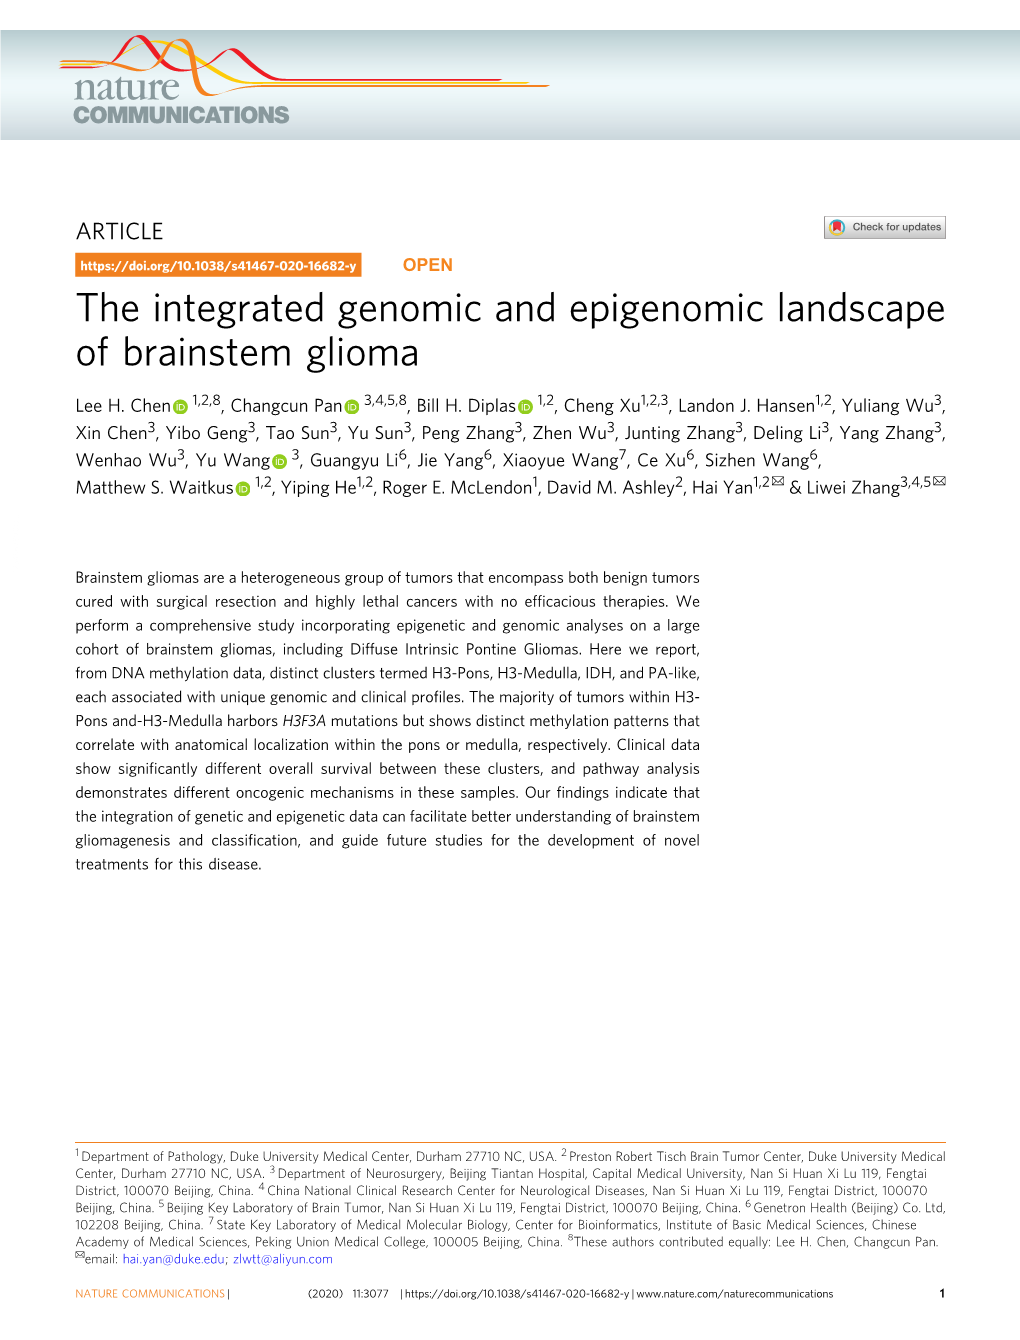 The Integrated Genomic and Epigenomic Landscape of Brainstem Glioma